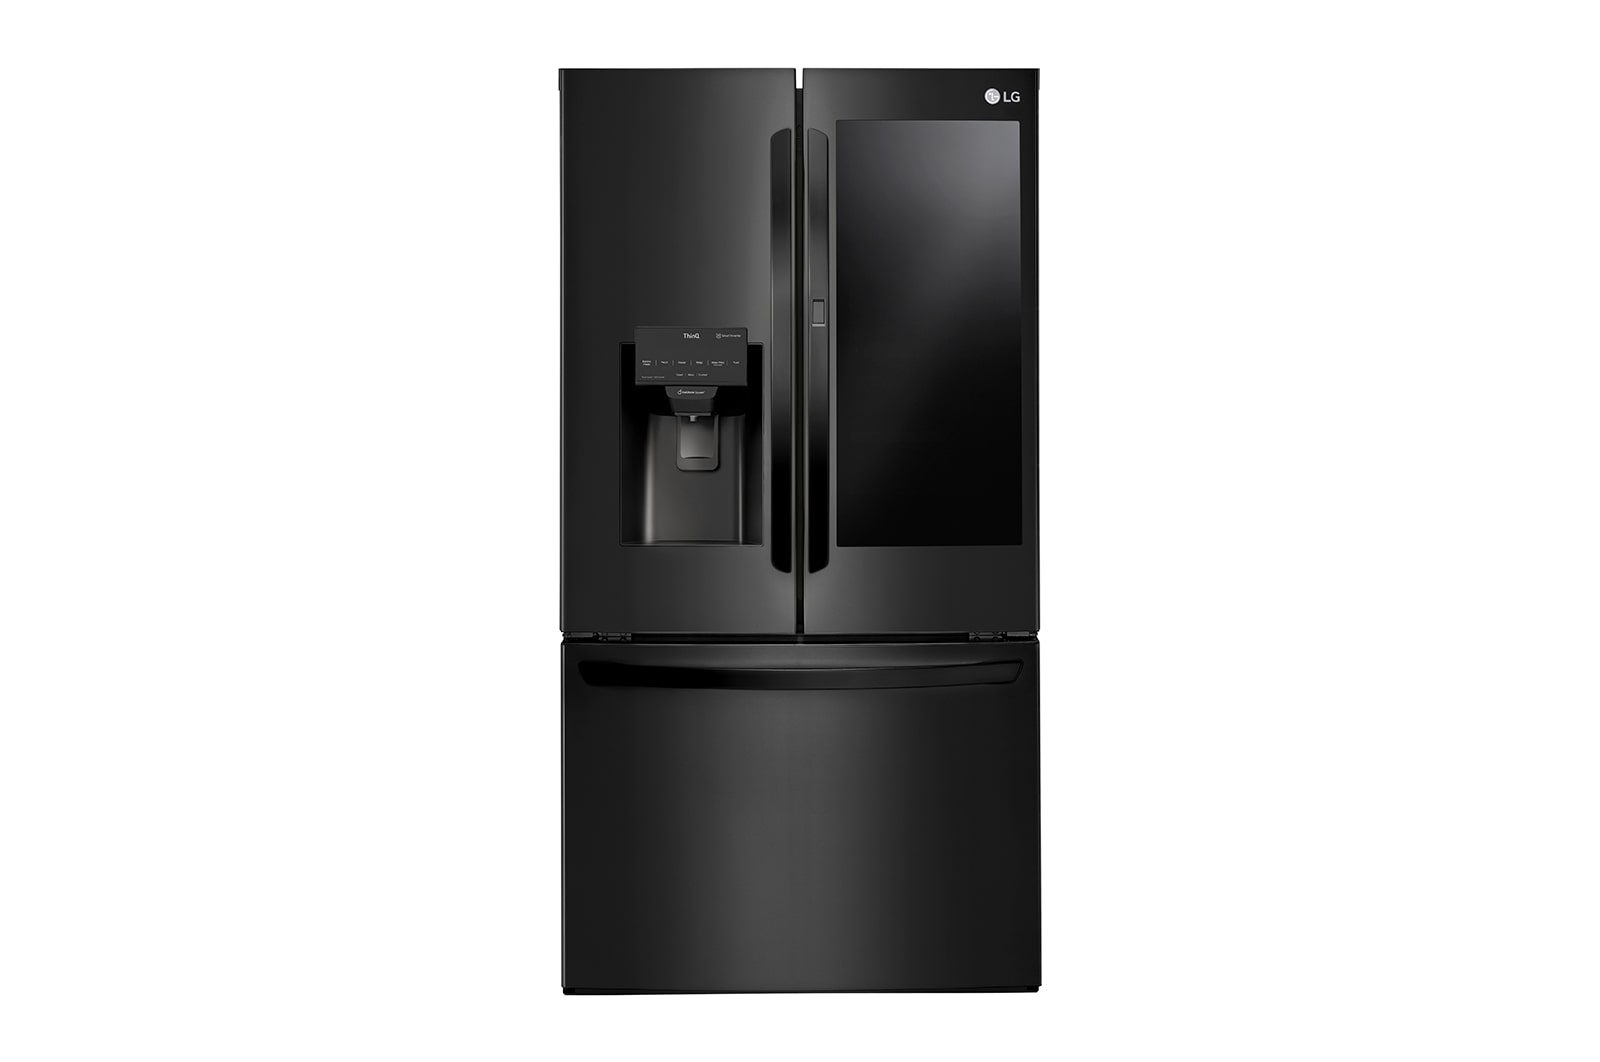 LG Nevecón LG Instaview - tipo europeo - 785 litros - dispensador de agua y hielo – ThinQ – Smart Inverter, GM78SXT